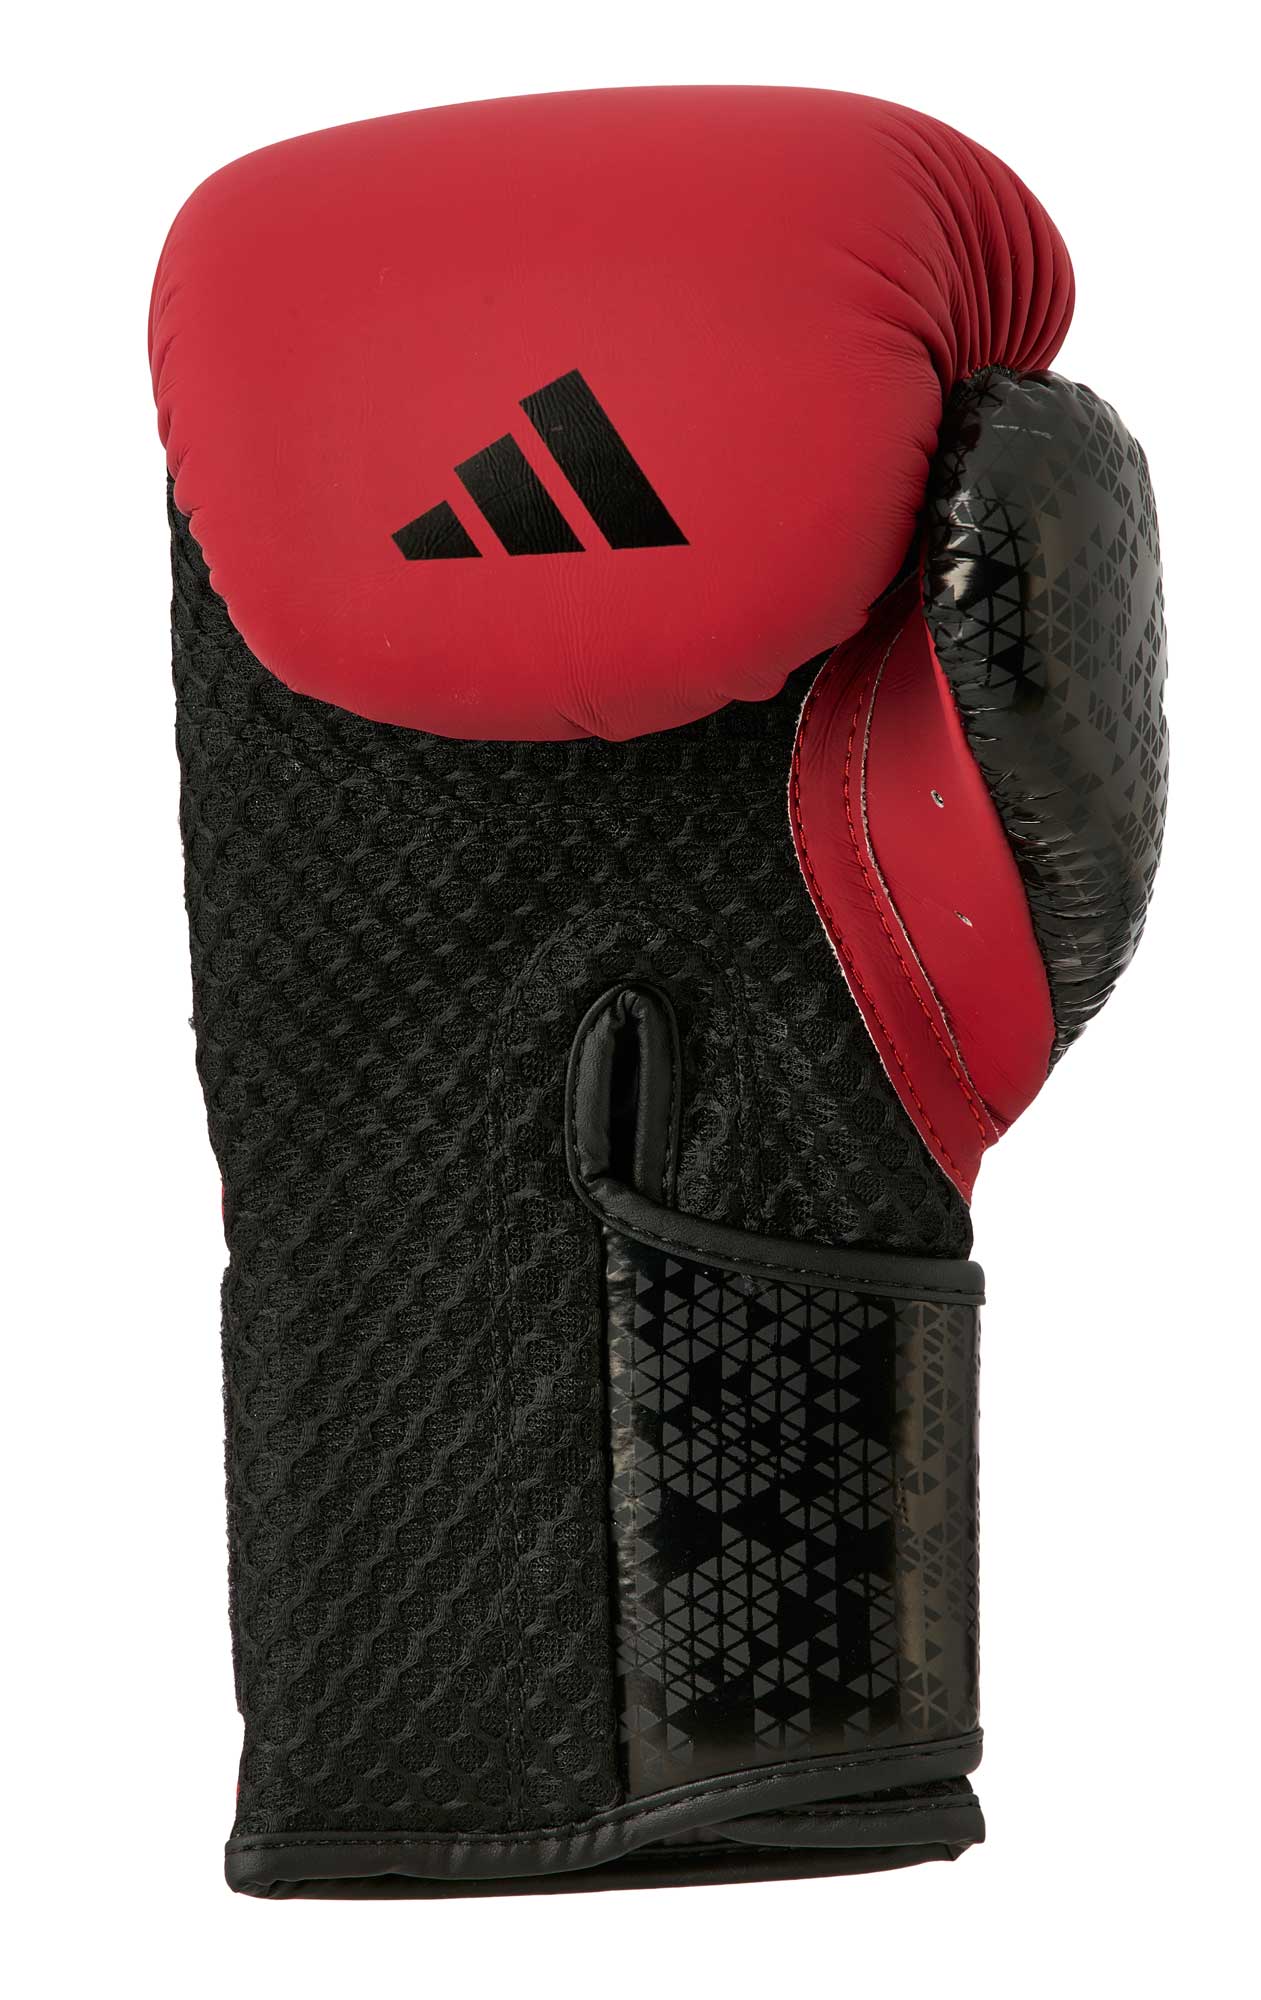 adidas Boxhandschuhe Combat 50 vivid red/black, adiC50TG